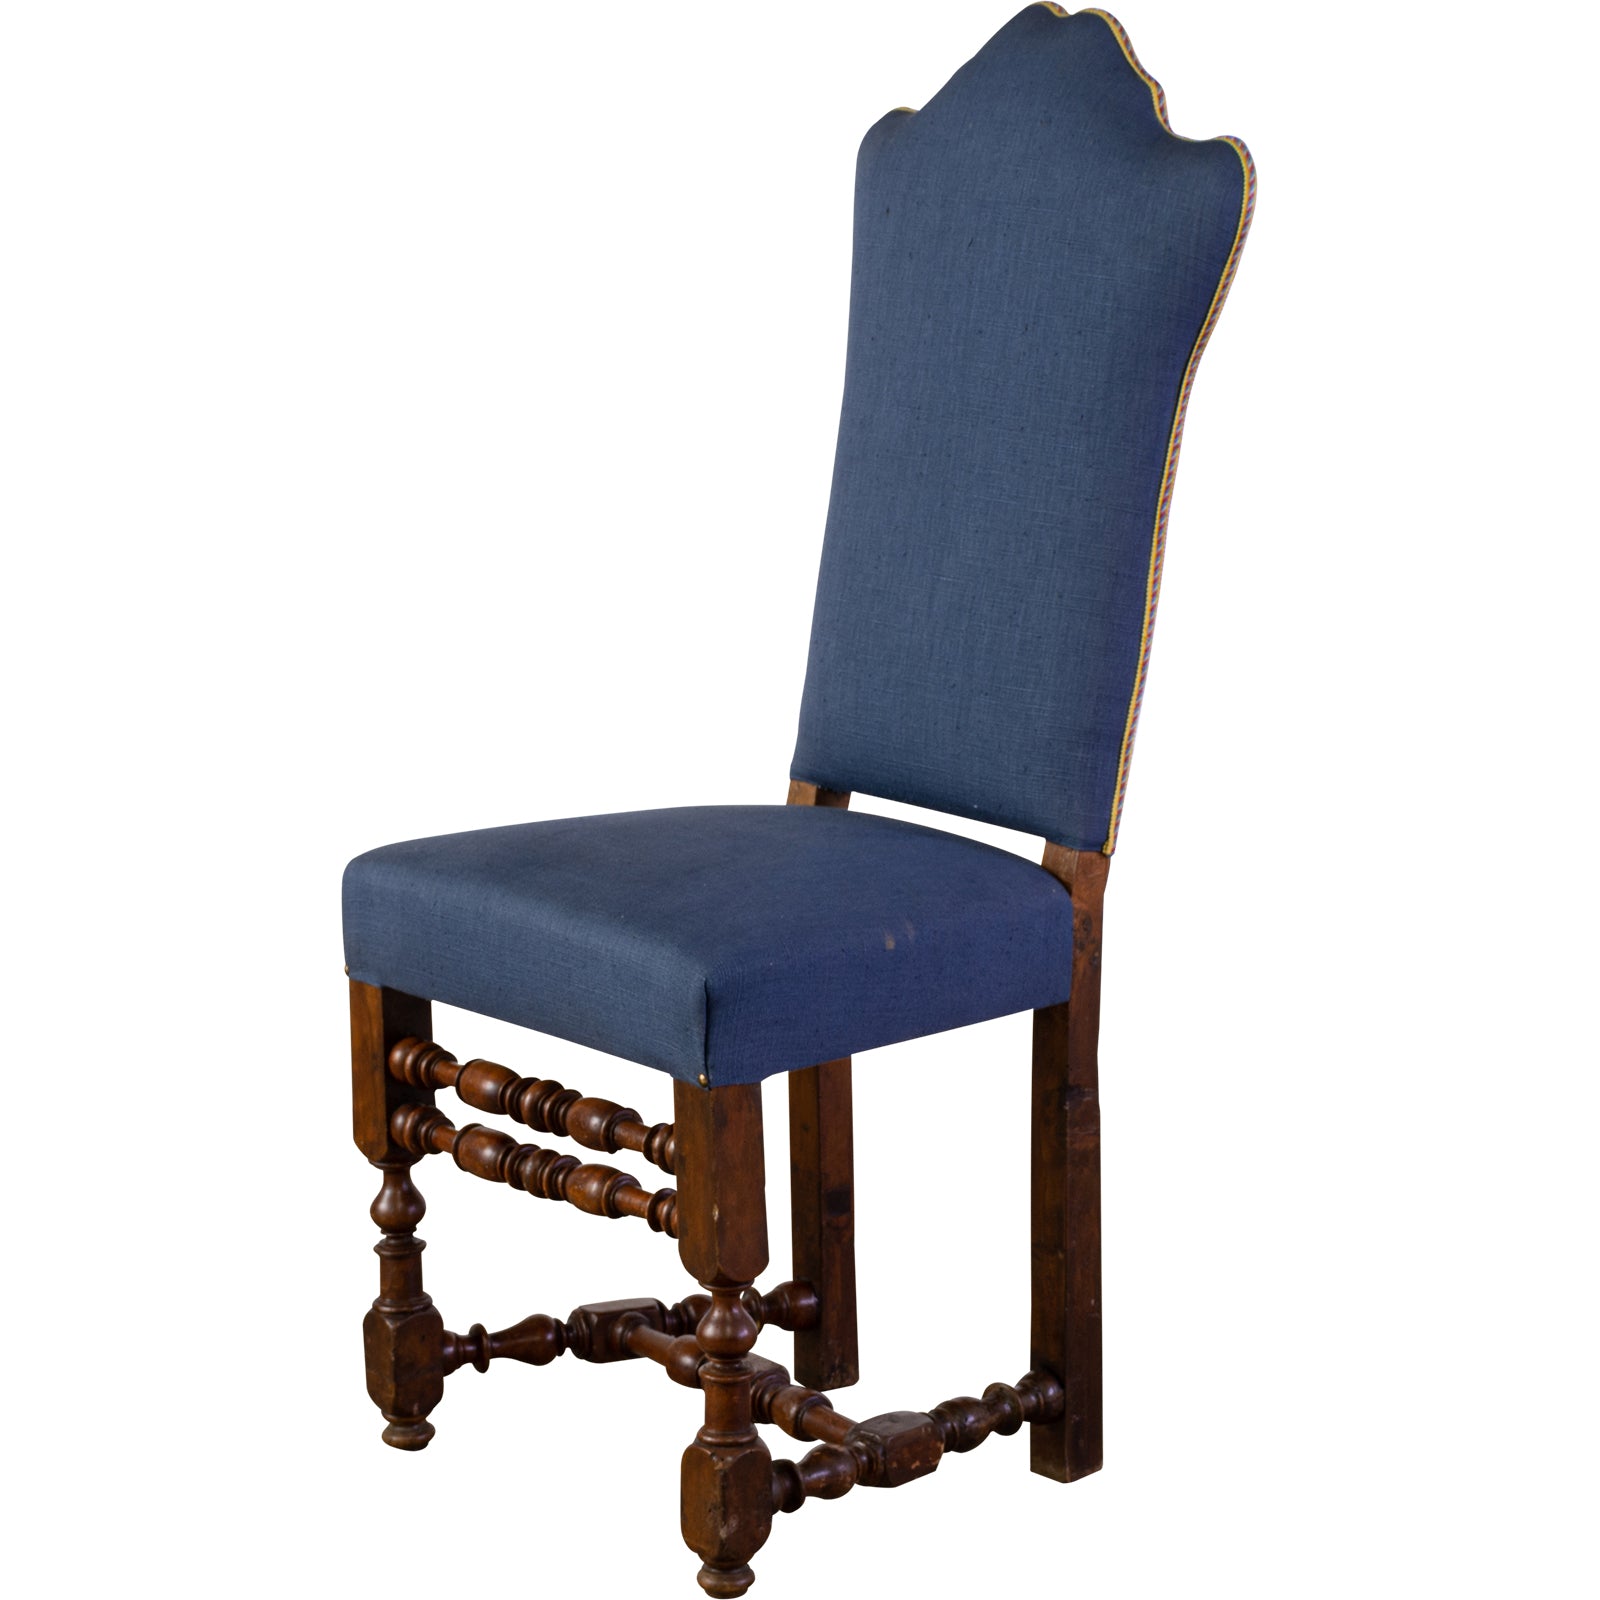 19th Century Italian Walnut Side Chair with Camel Back